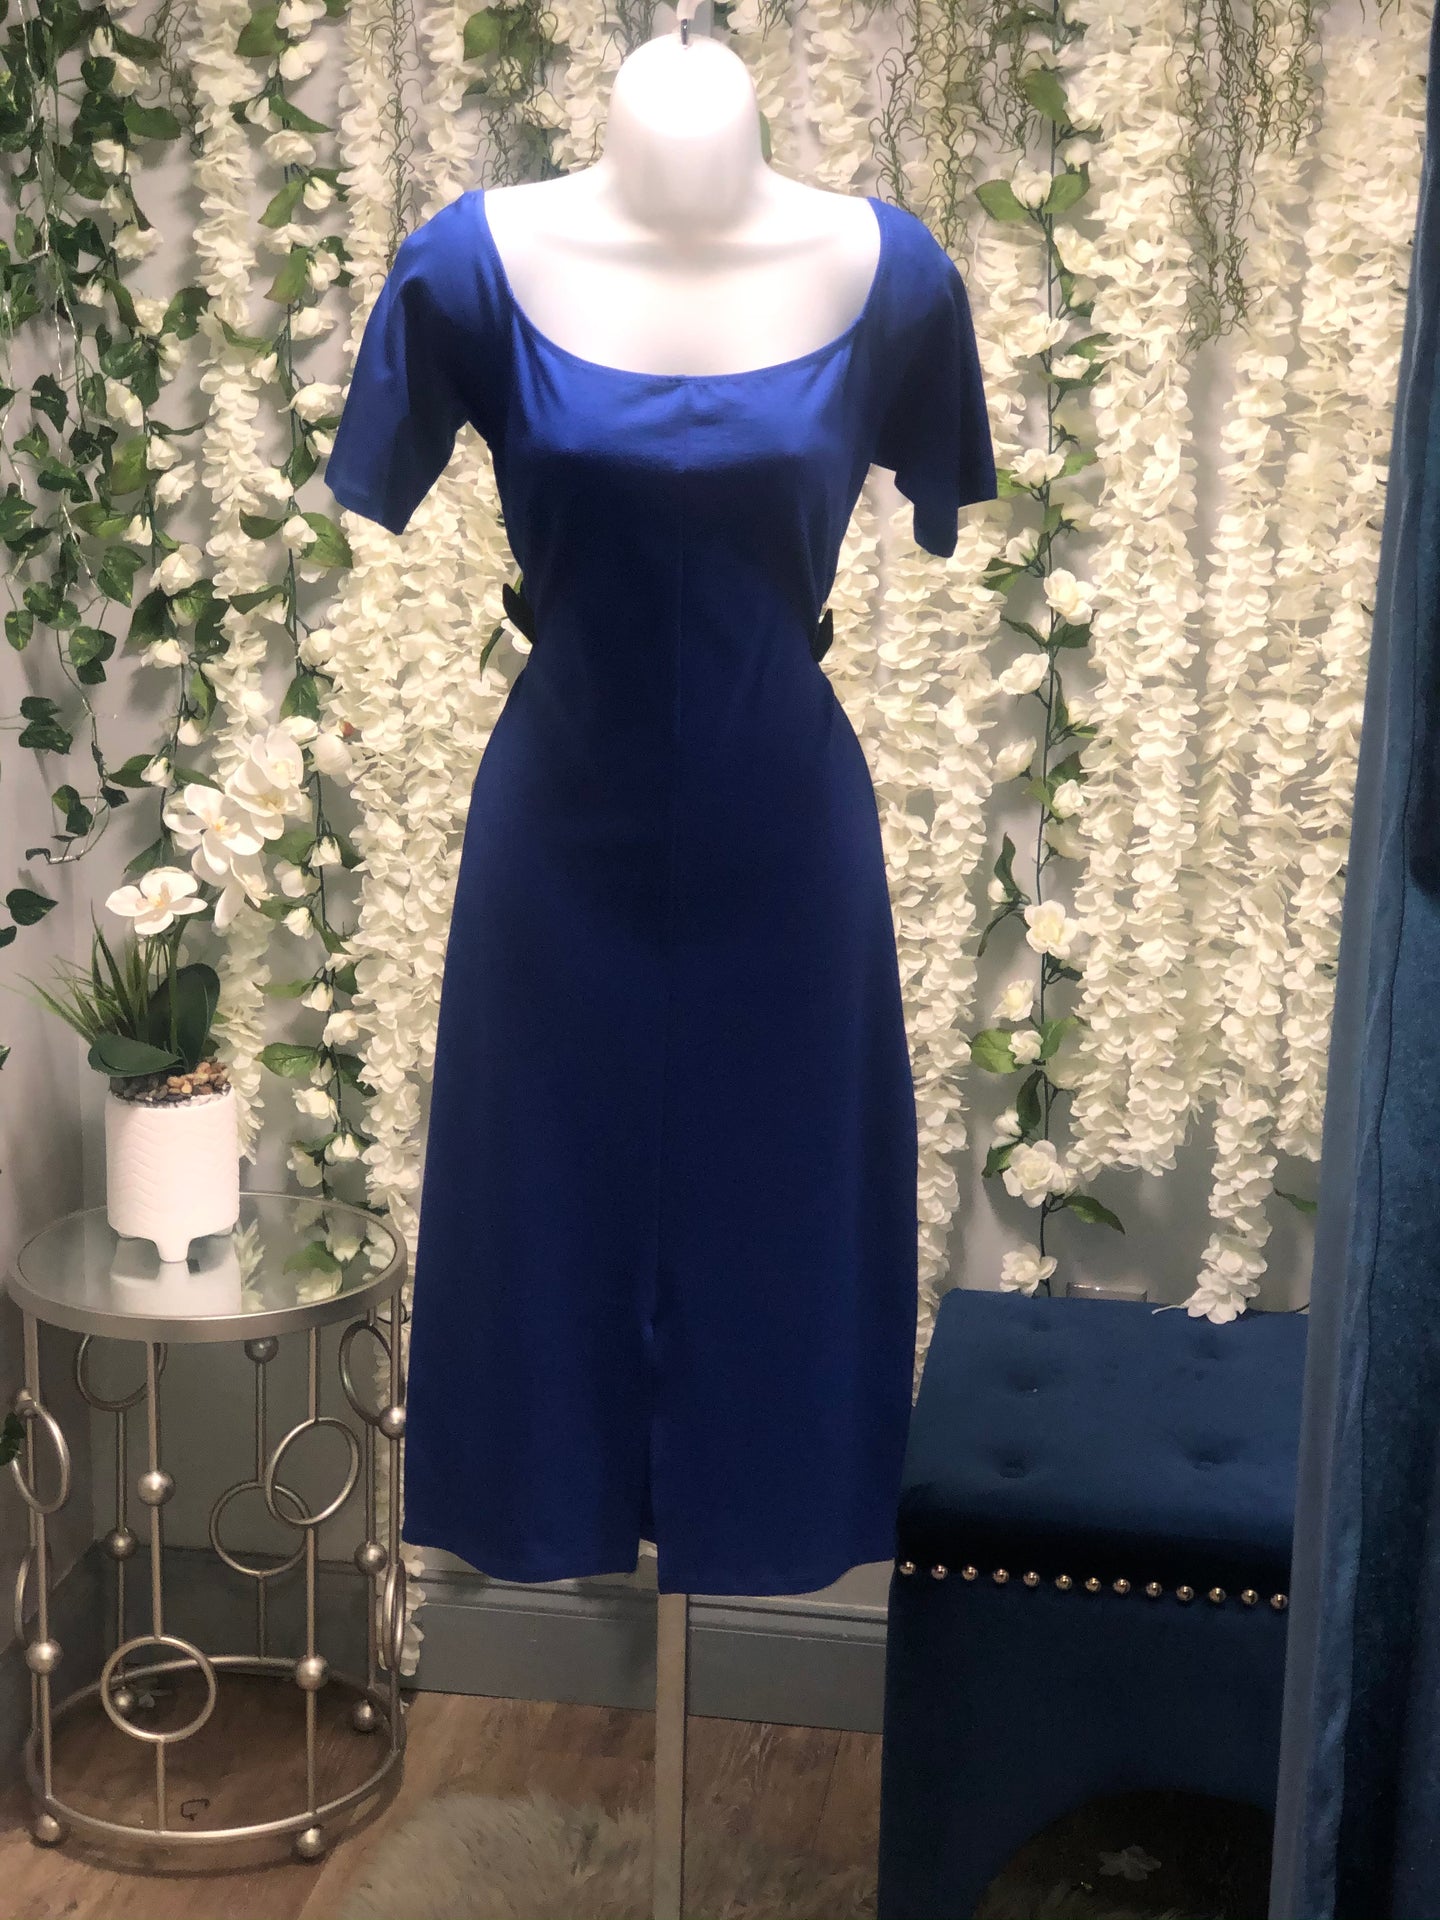 Basic Blue Dress